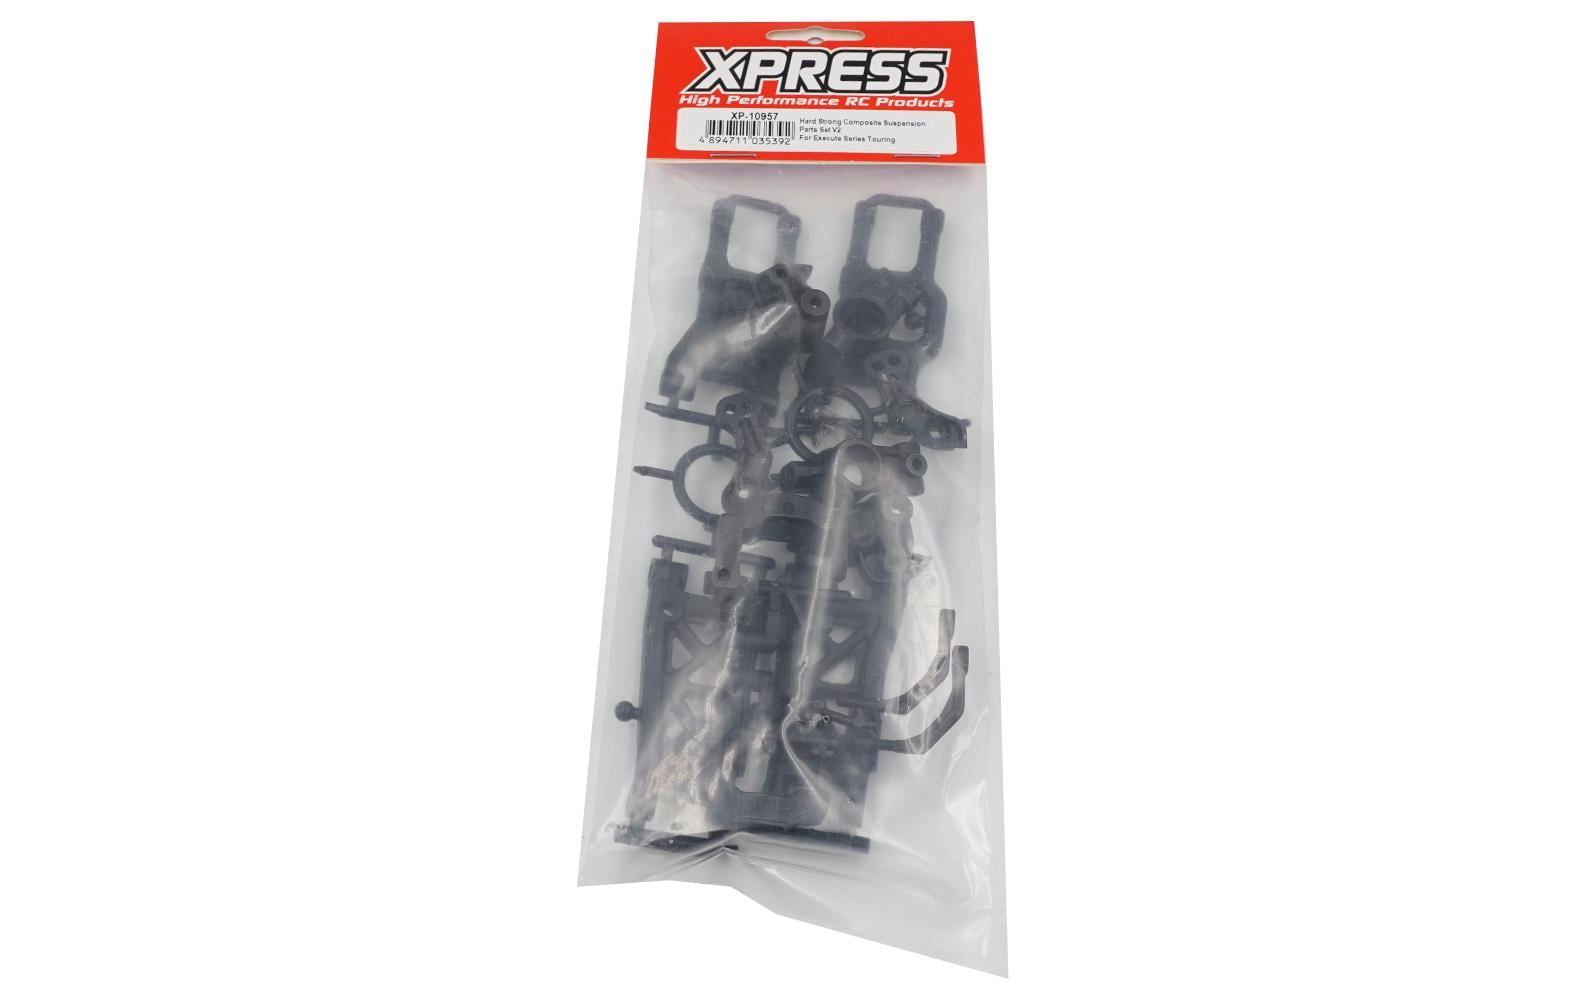 Xpress Aufhängungs-Teile Set V2, Composite Hart, für Execute Serie